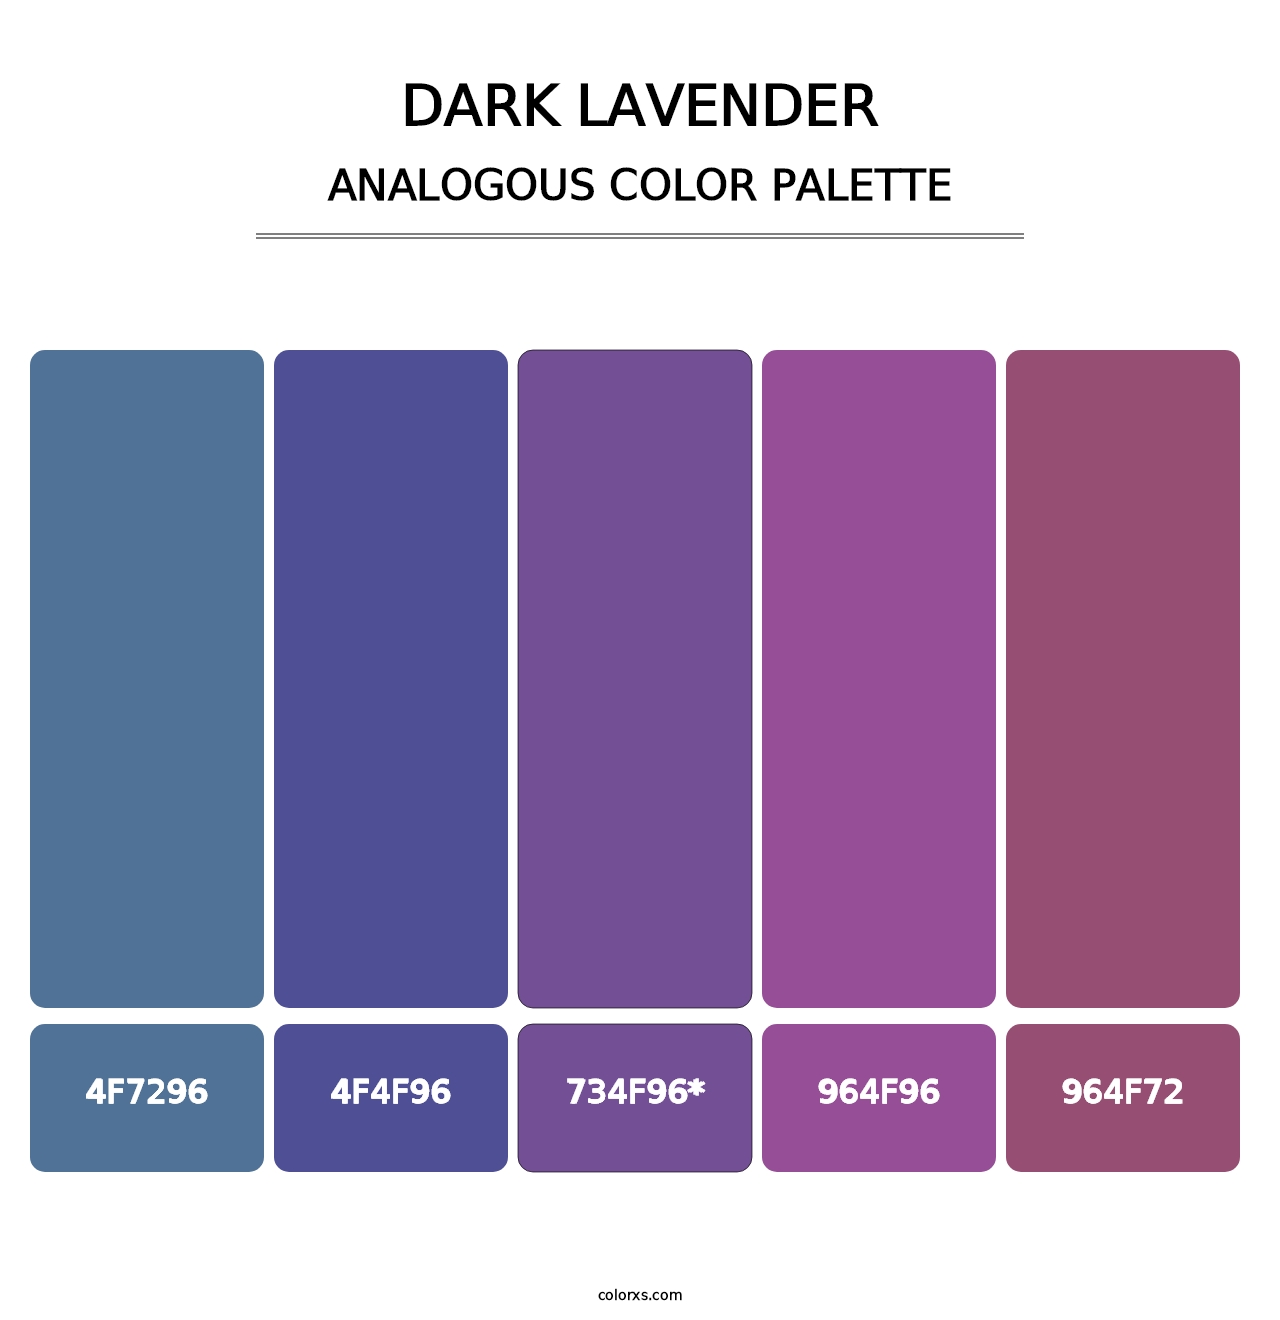 Dark Lavender - Analogous Color Palette